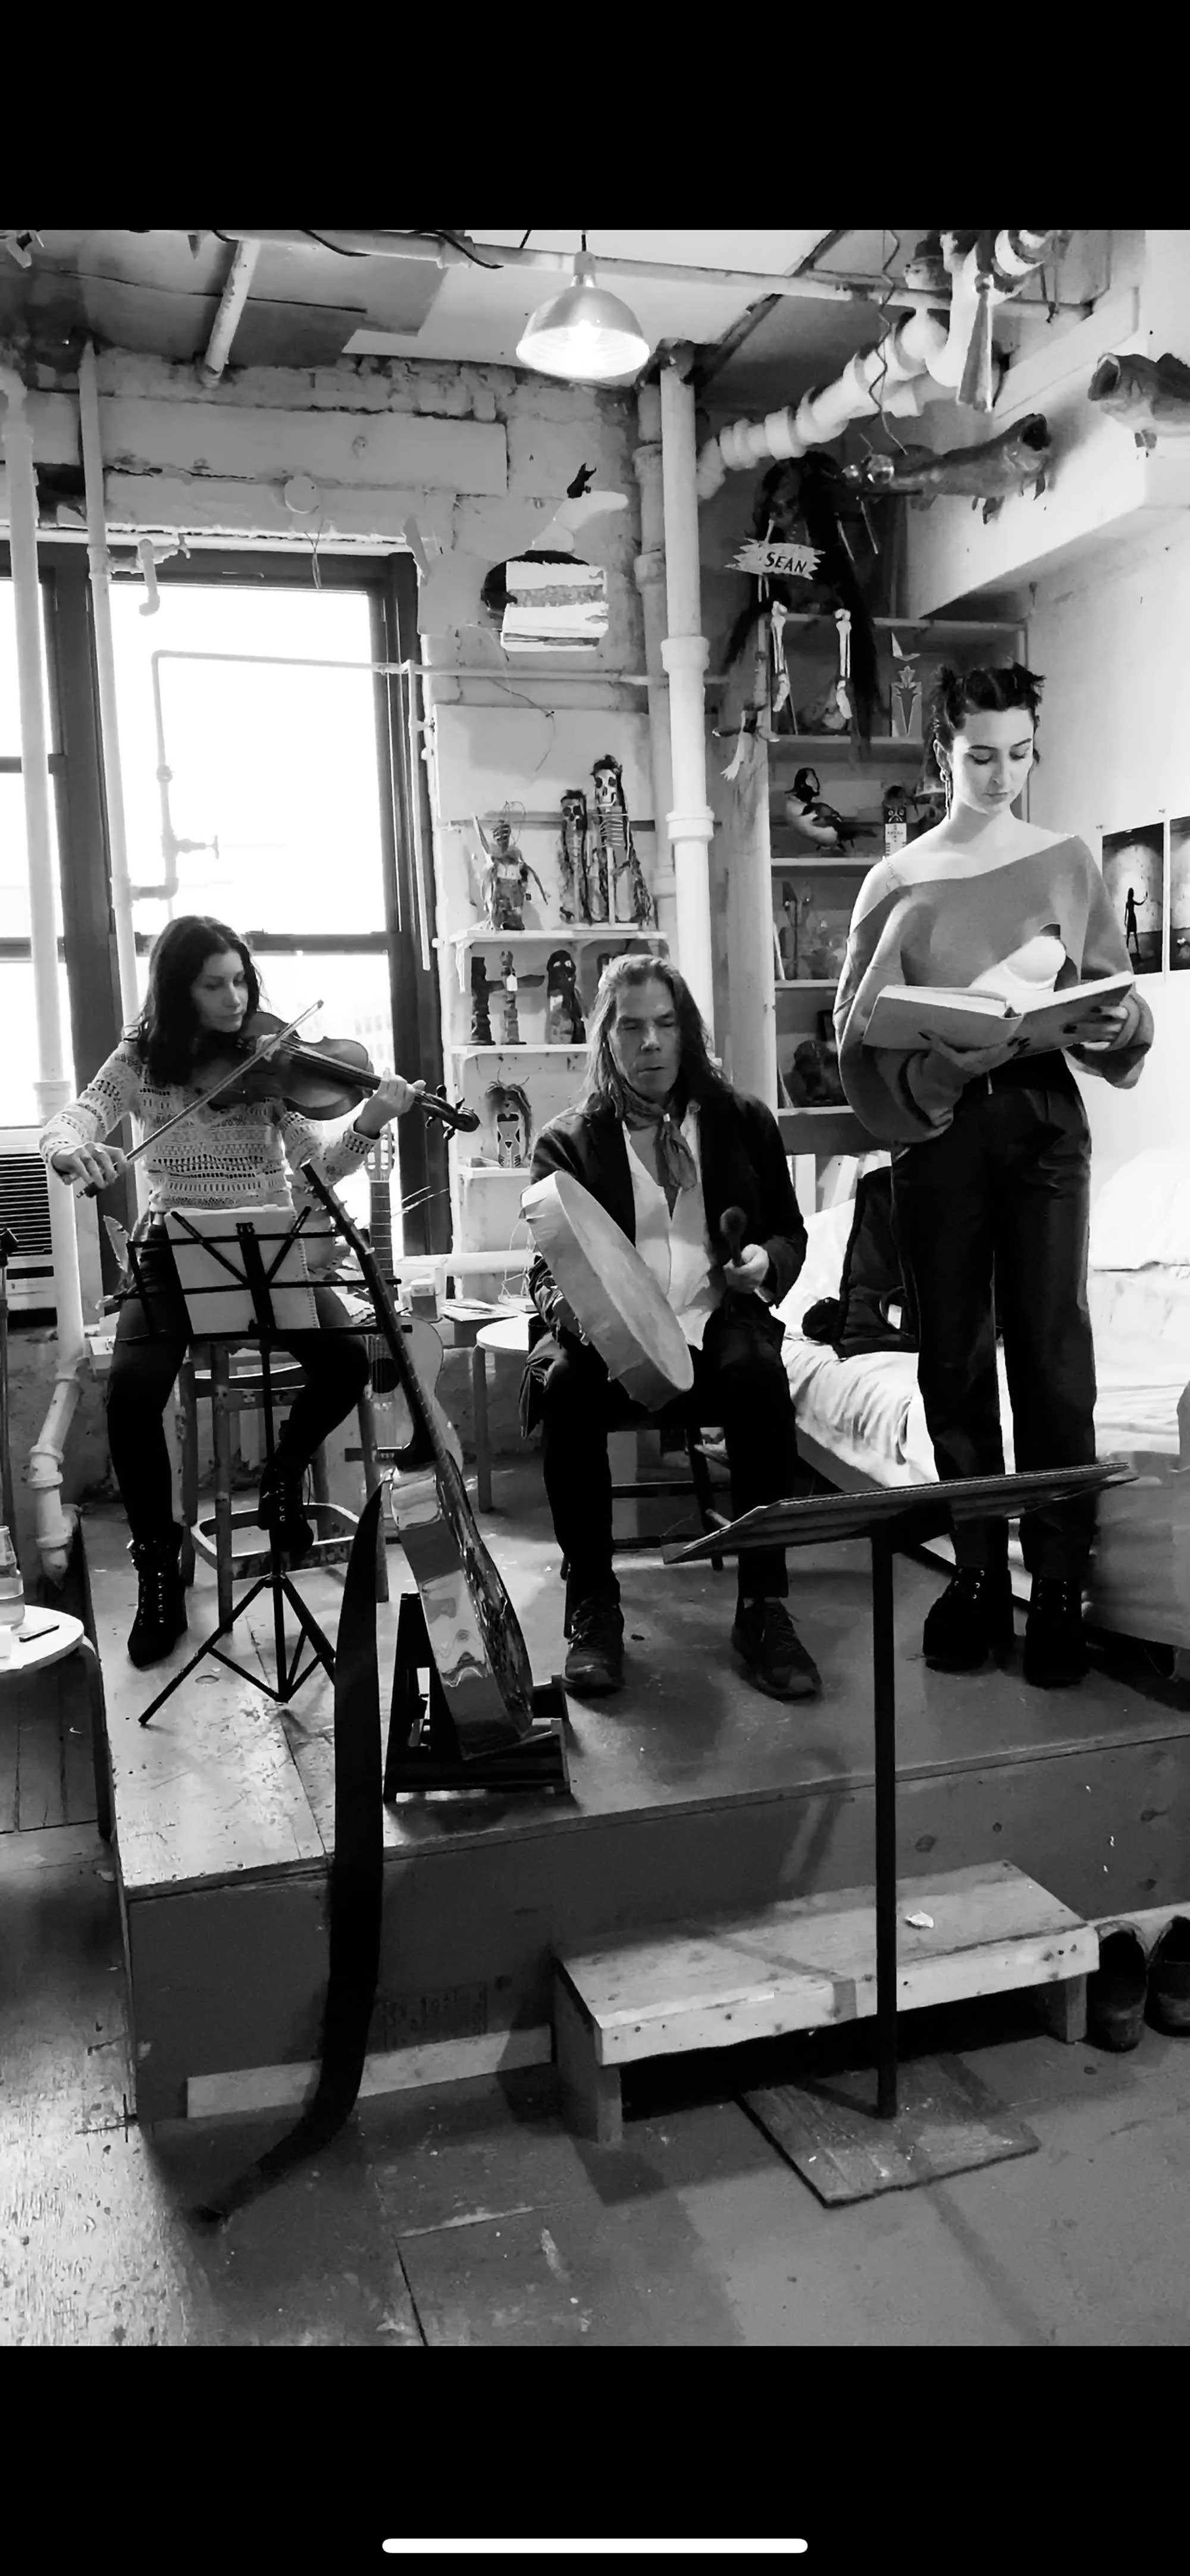  In studio performance, Brooklyn, NY 2019 